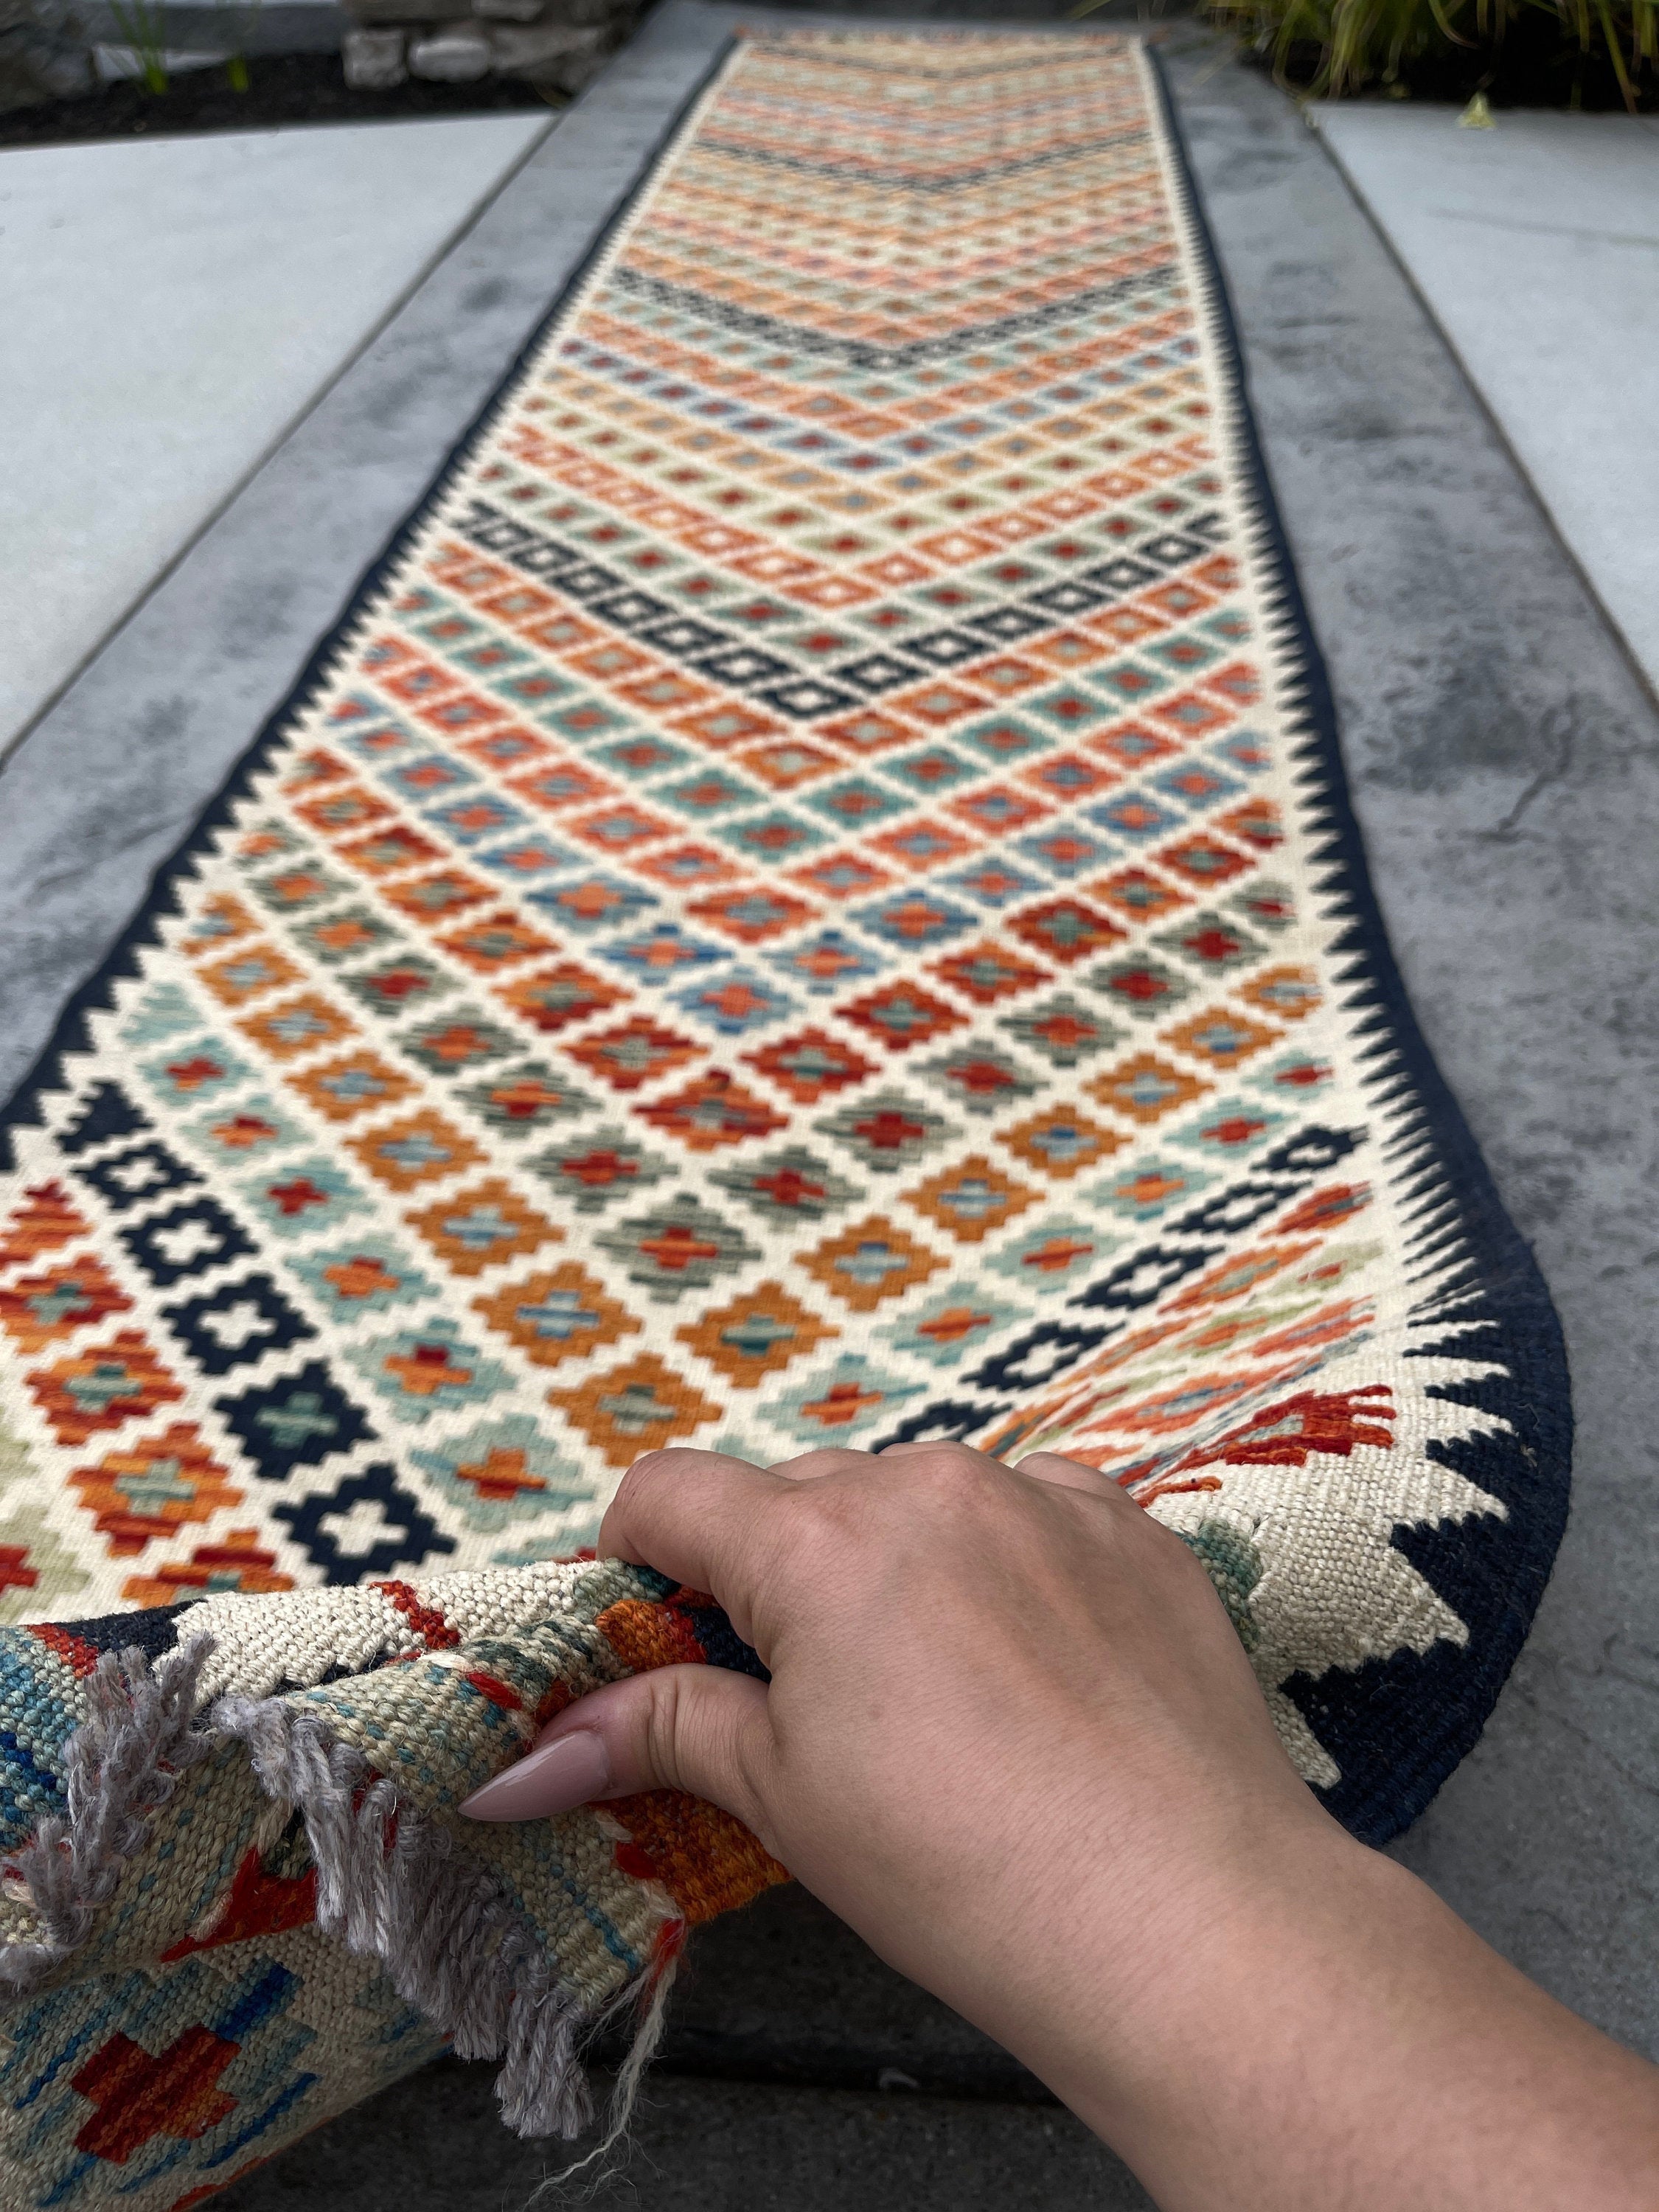 3x13 (90x395) Handmade Afghan Kilim Rug Runner | Ivory Cream Black Orange Blue Green | Flatweave Flat Weave Tribal Oriental Boho Wool